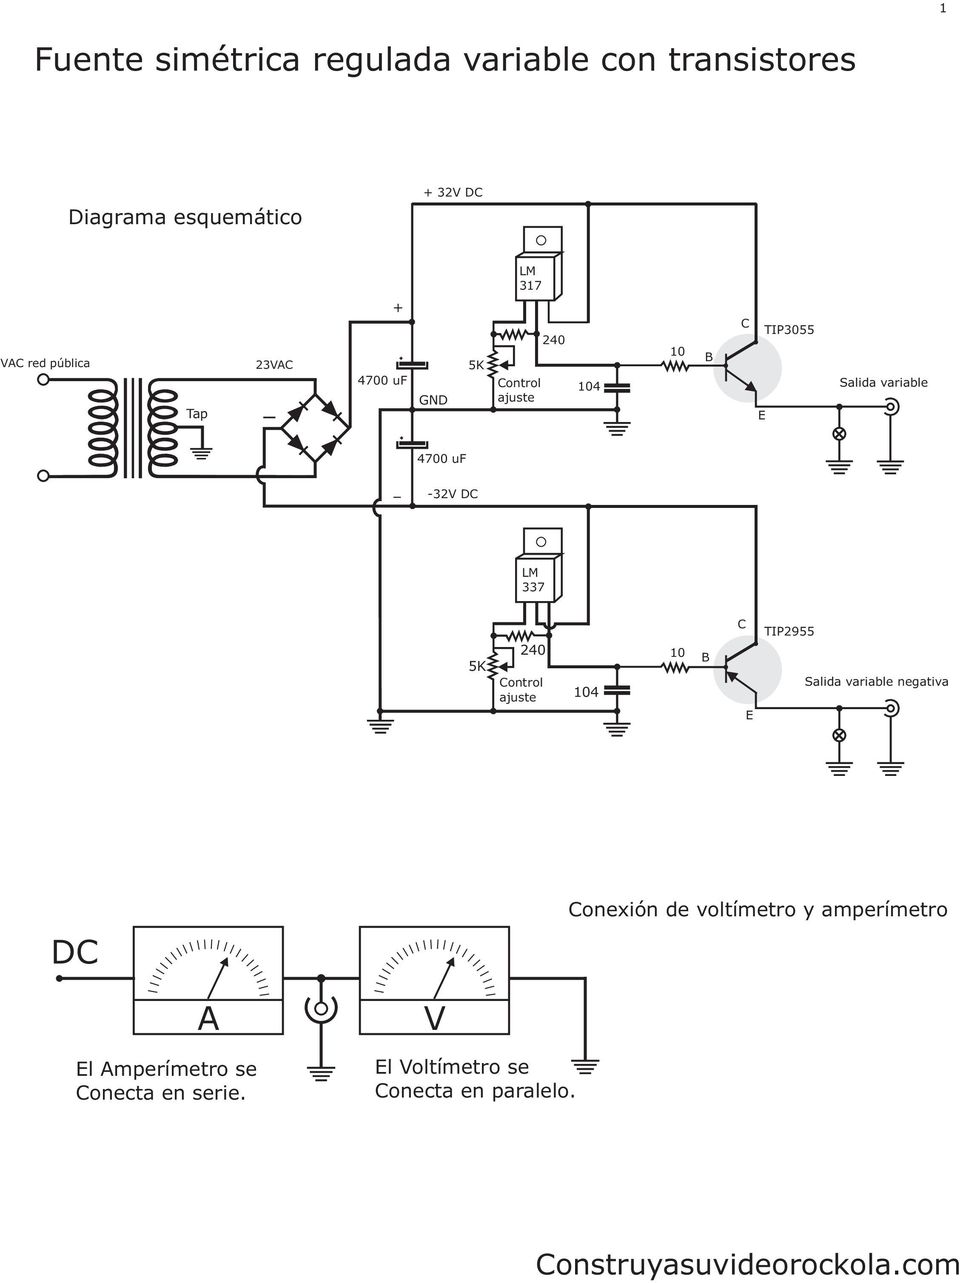 -32V DC LM 337 Control ajuste 4 B C E TIP2955 Salida variable negativa DC Conexión de